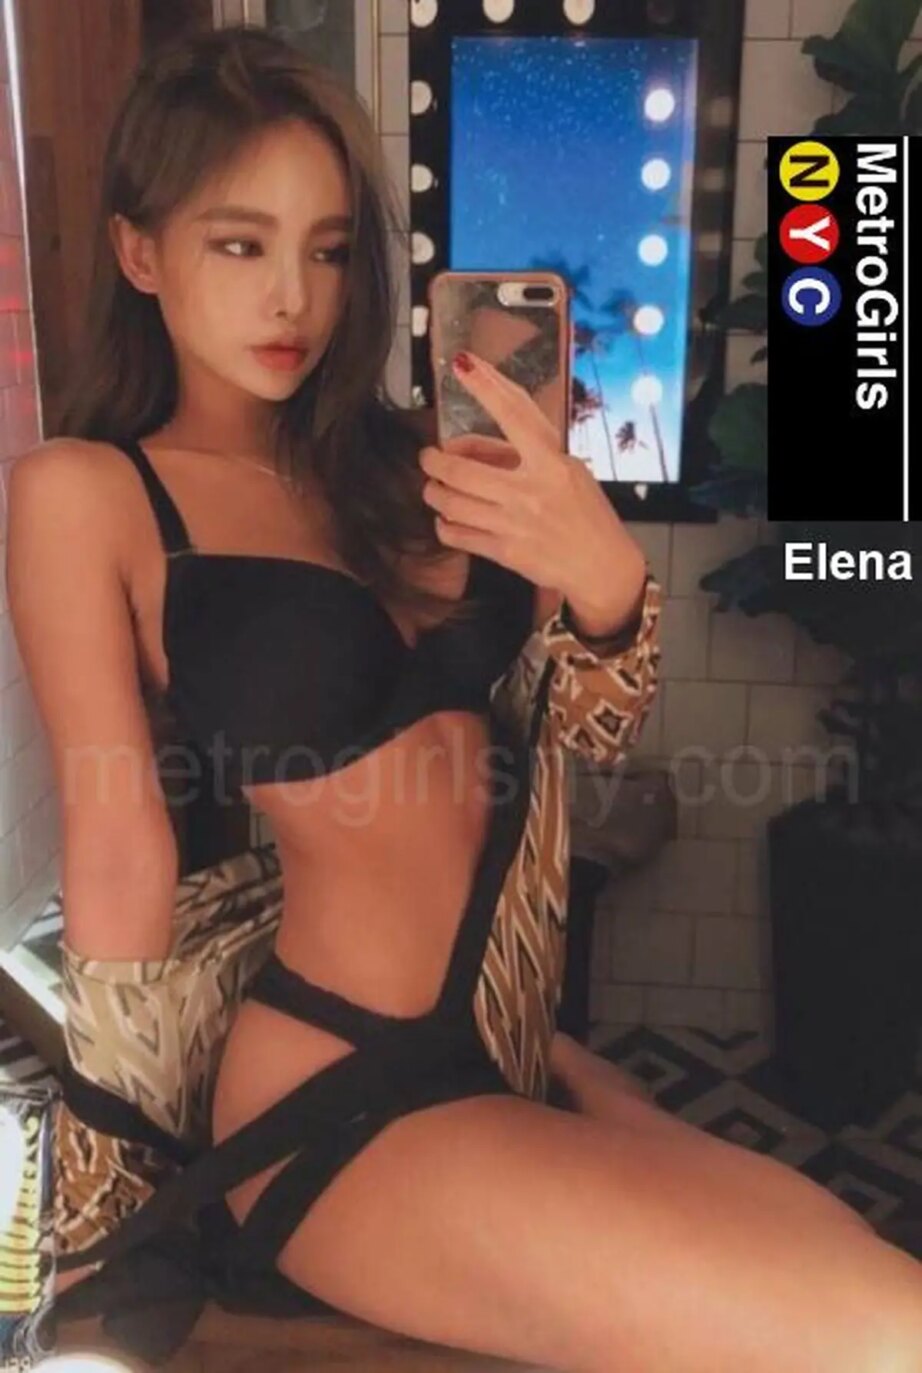 Escort - Ellena | Elena - Los Angeles